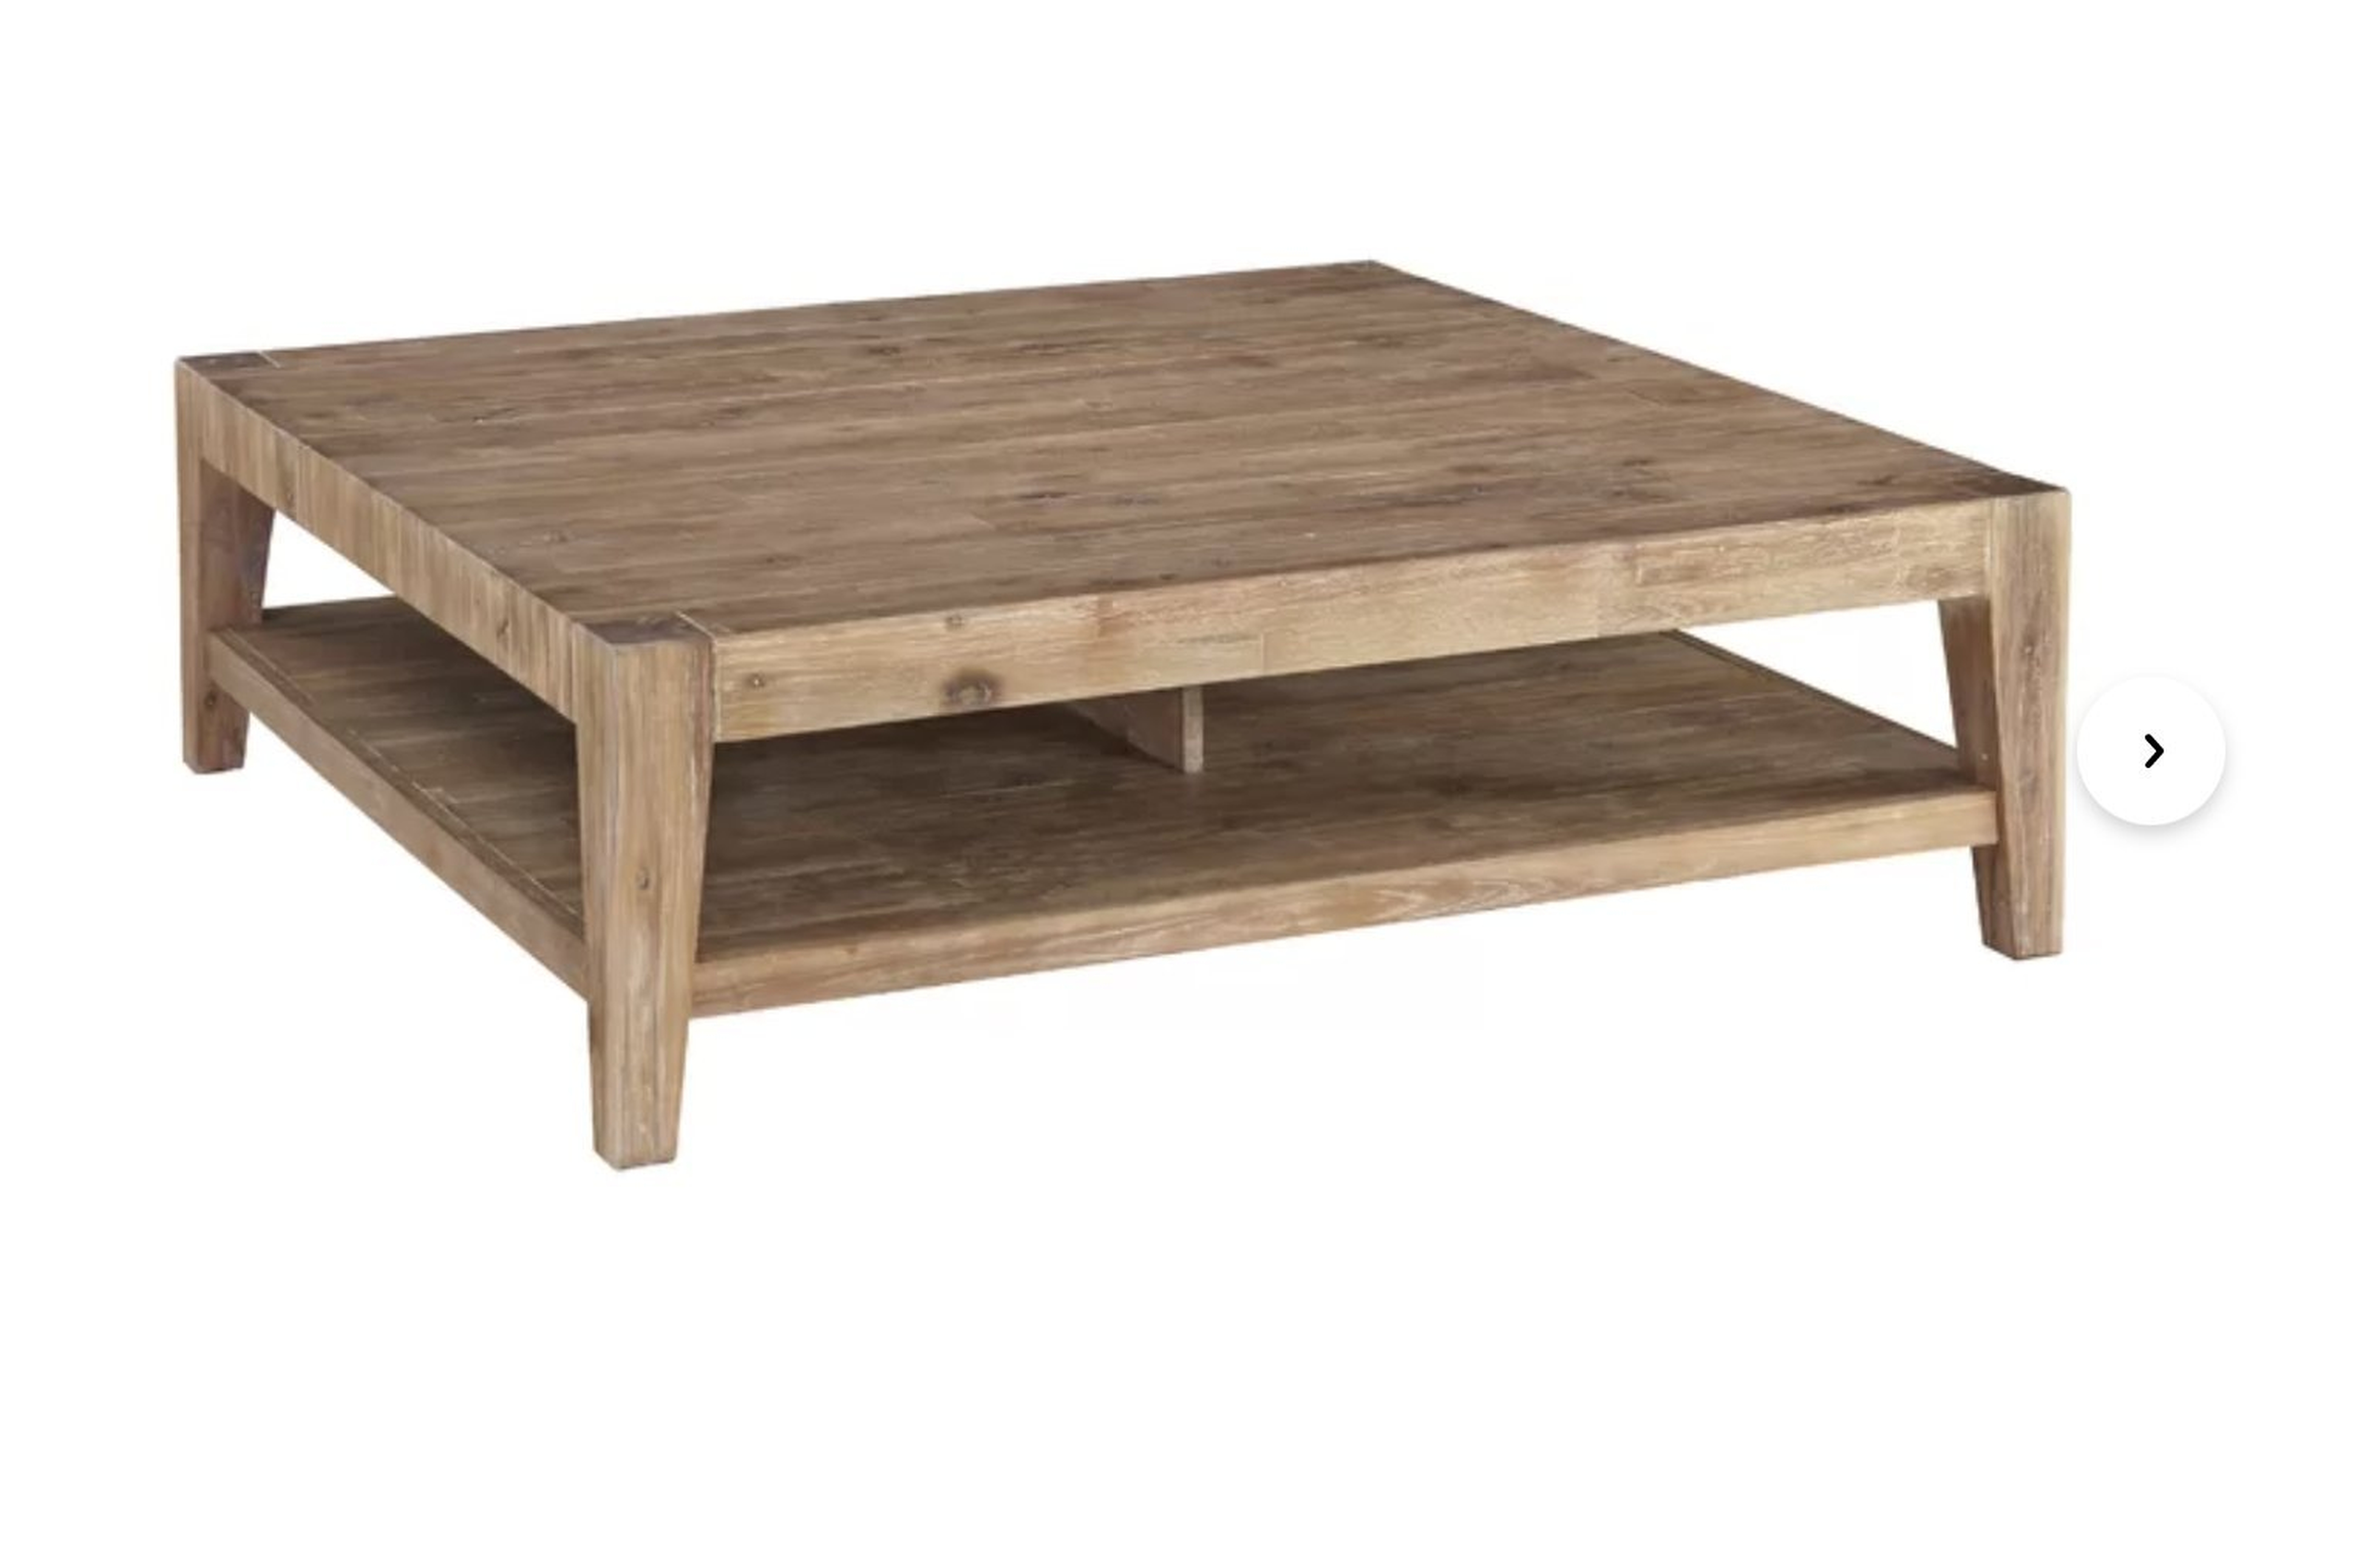 Savannah Solid Wood Coffee Table with Storage - IN STOCK 6/8/21 - Wayfair